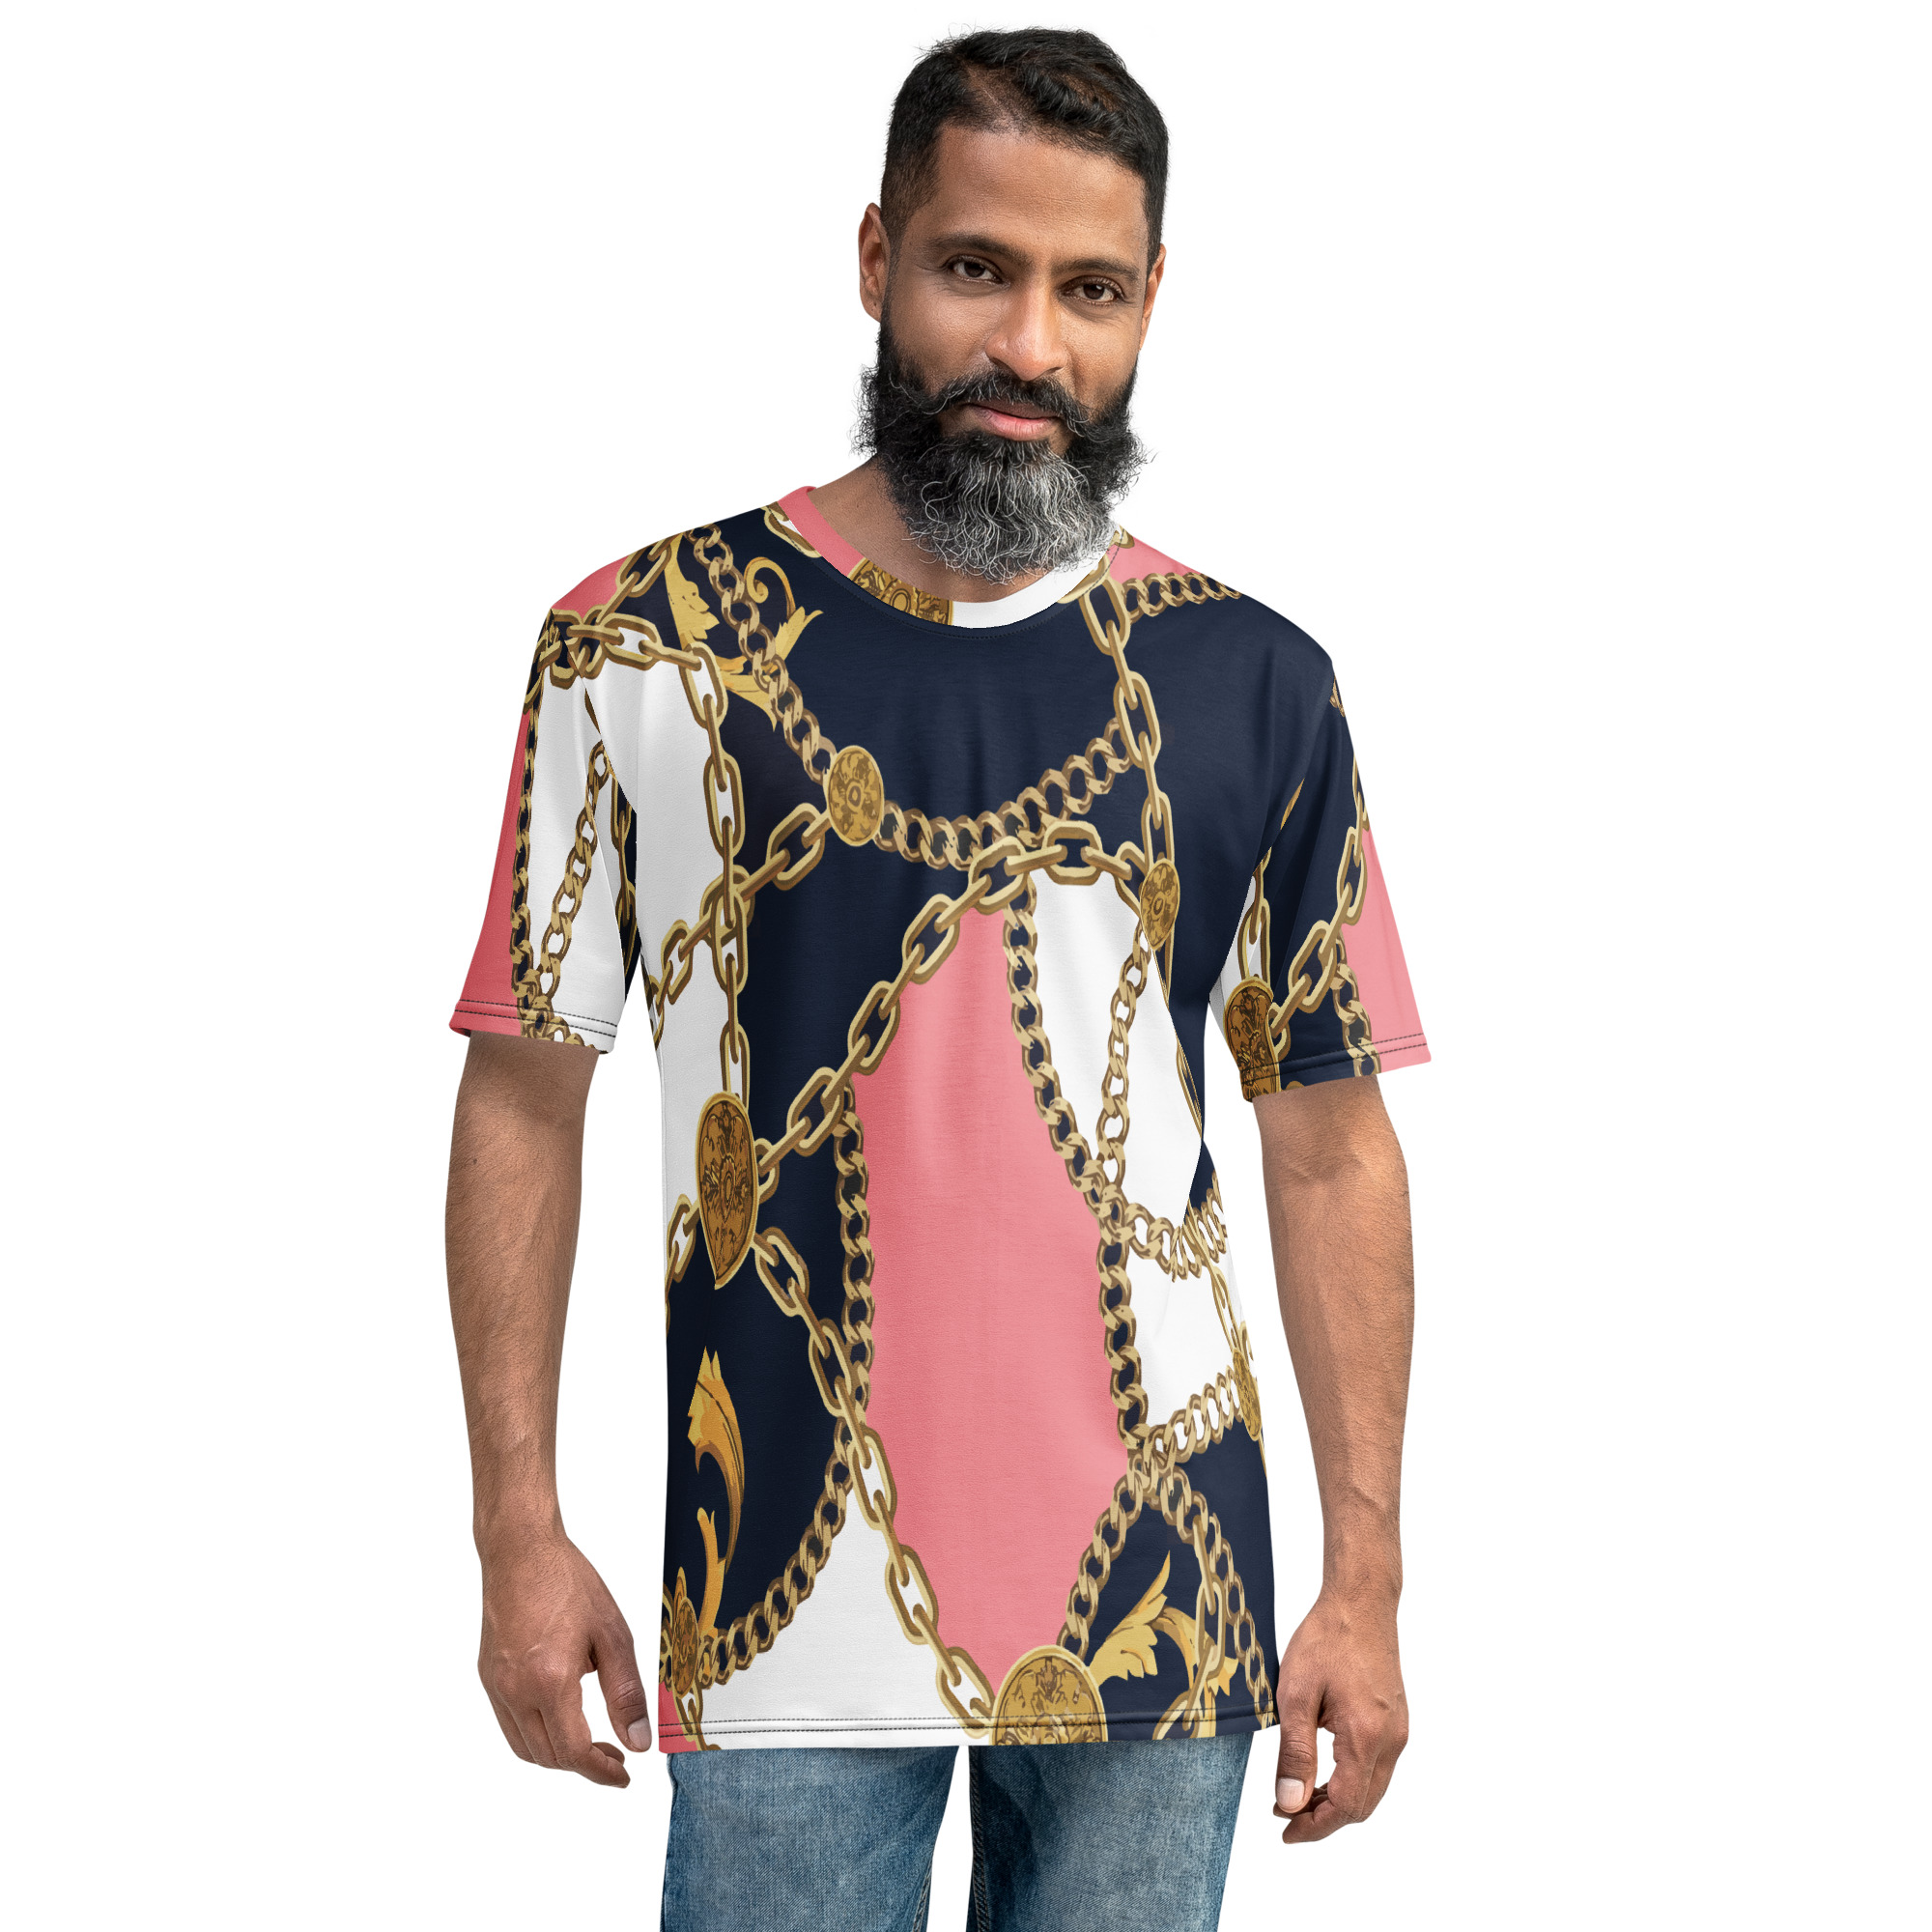 Shirt | heron preston shirt american fighter shirts blink 182 shirt